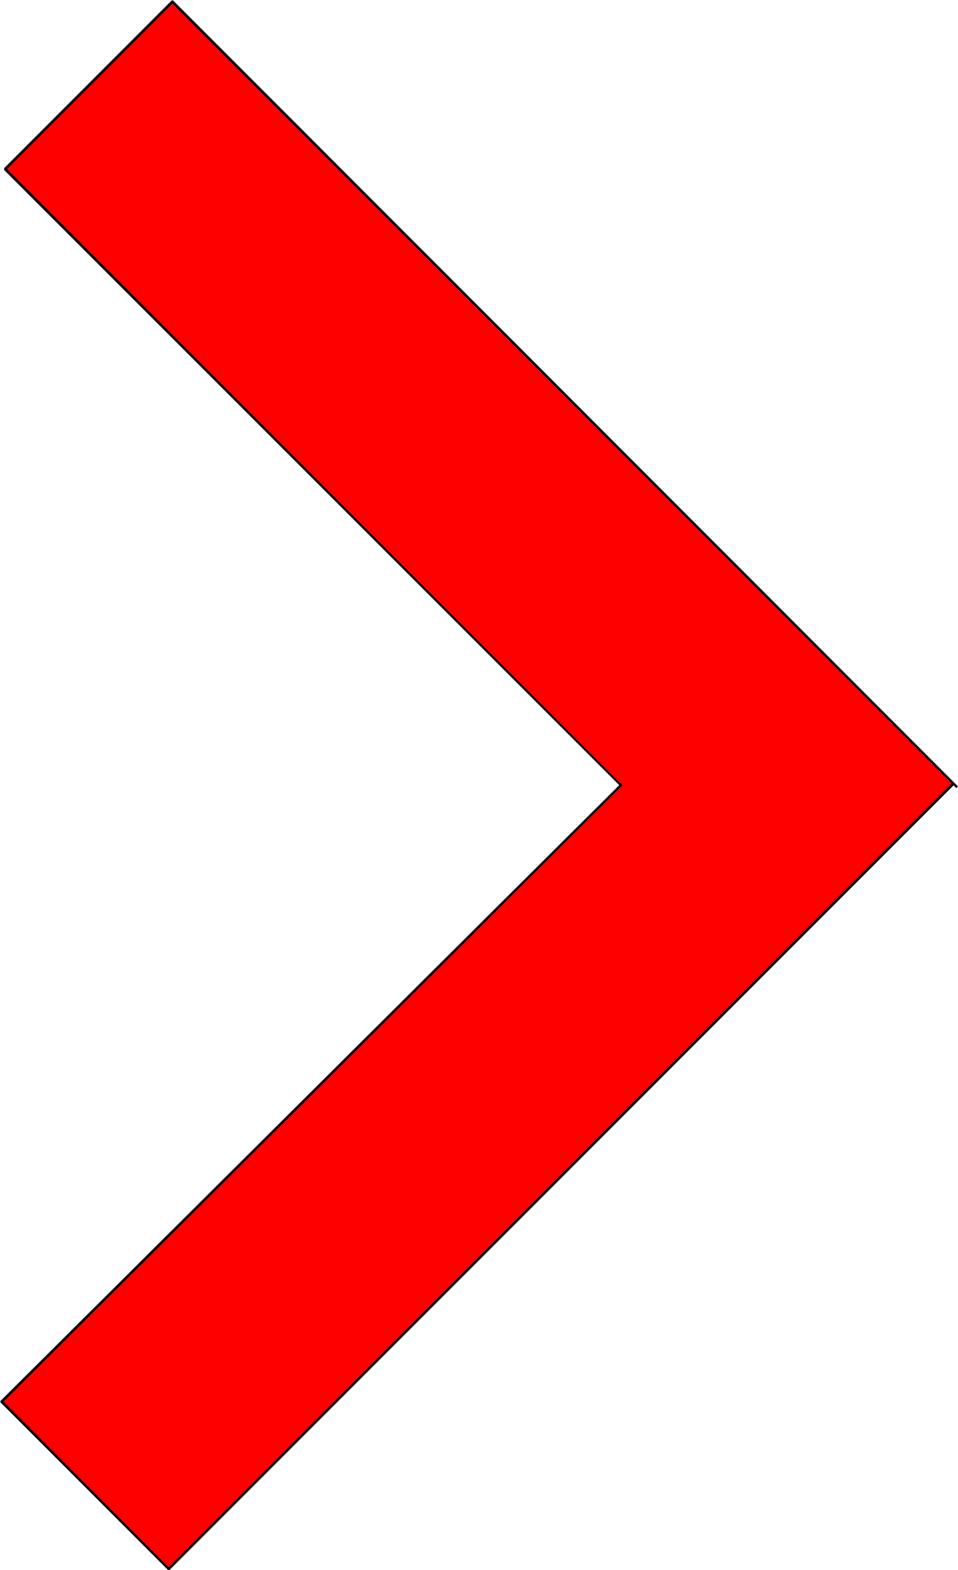 Small Arrow Clipart Image - Red Small Arrow Transperant (958x1570)